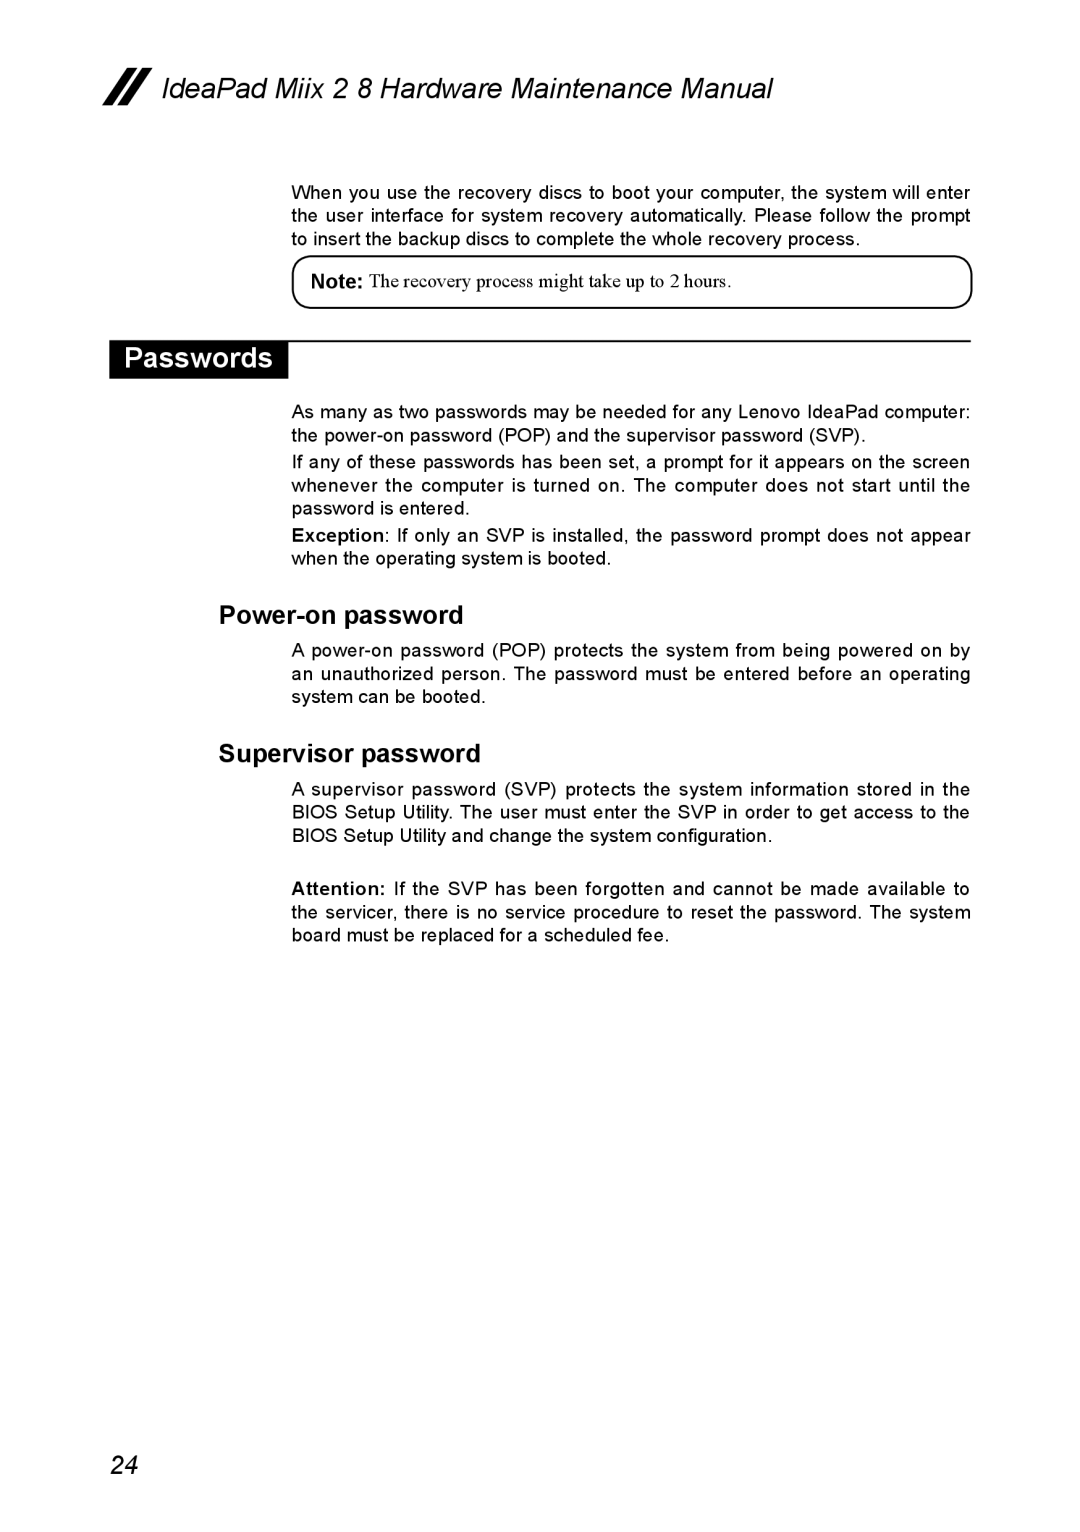 Lenovo MIIX 2 8 manual Passwords, Power-on password, Supervisor password, IdeaPad Miix 2 8 Hardware Maintenance Manual 